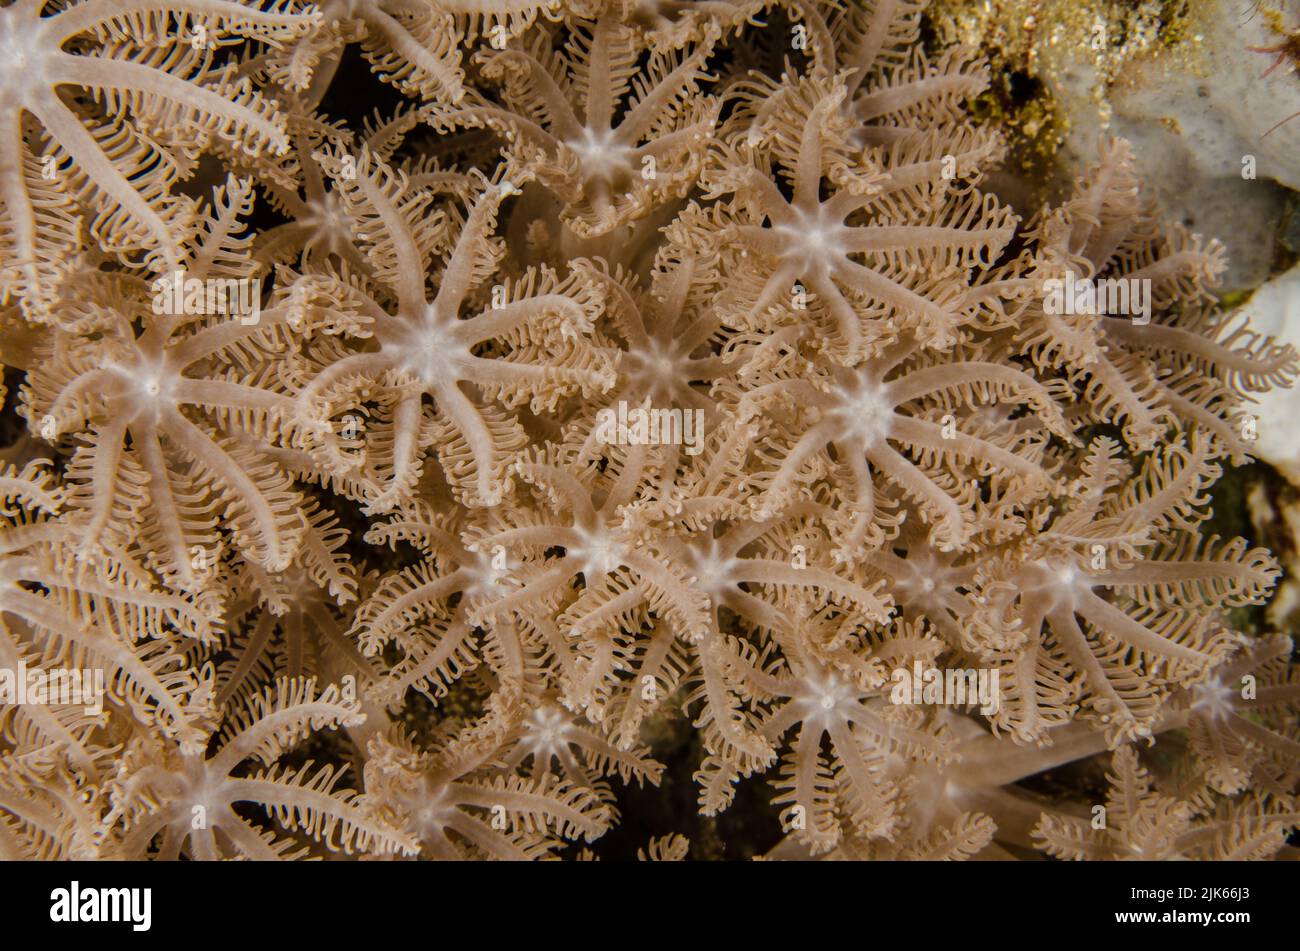 Coral blando, Anthelia sp. Xeniidae, Anilao, Batangas, Filipinas, Océano Indo-pacífico, Asia Foto de stock